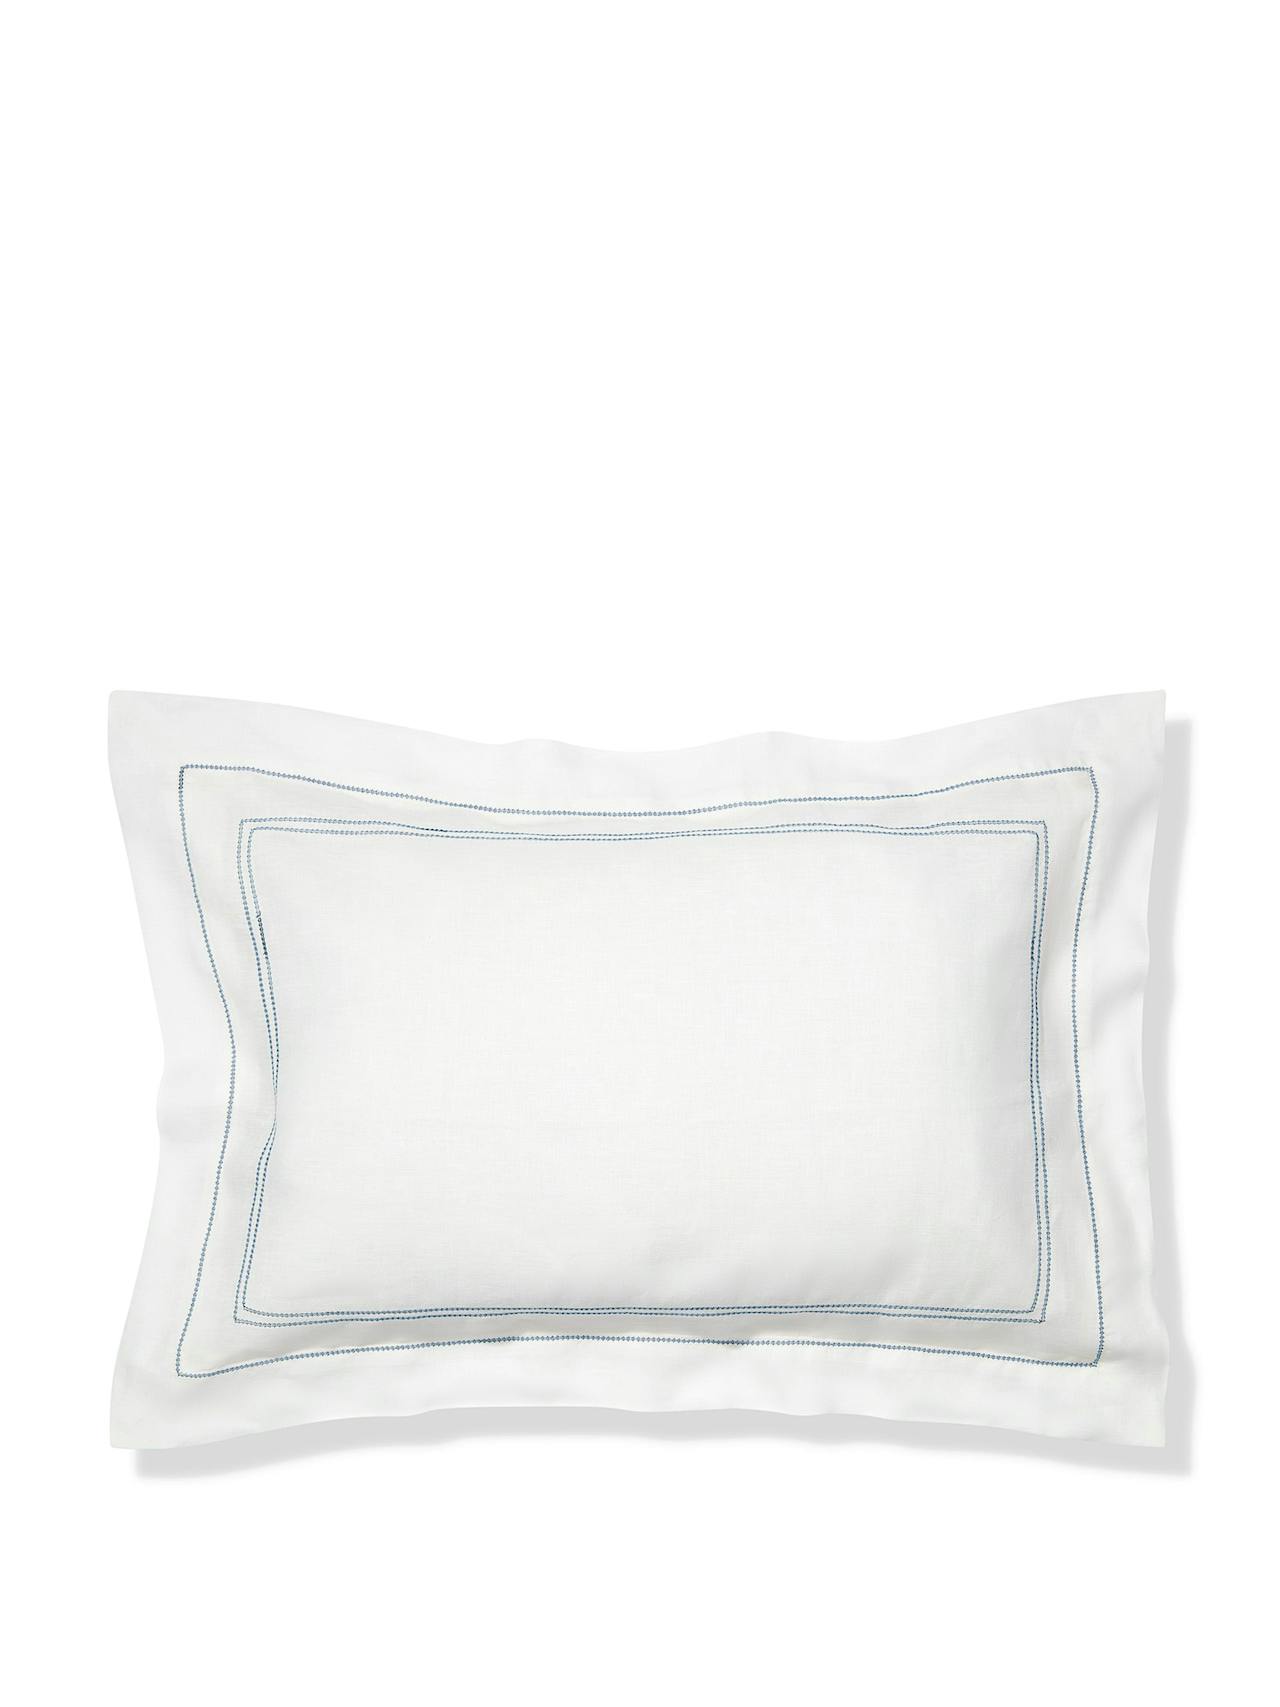 Prussian blue hemstitch pillowcase